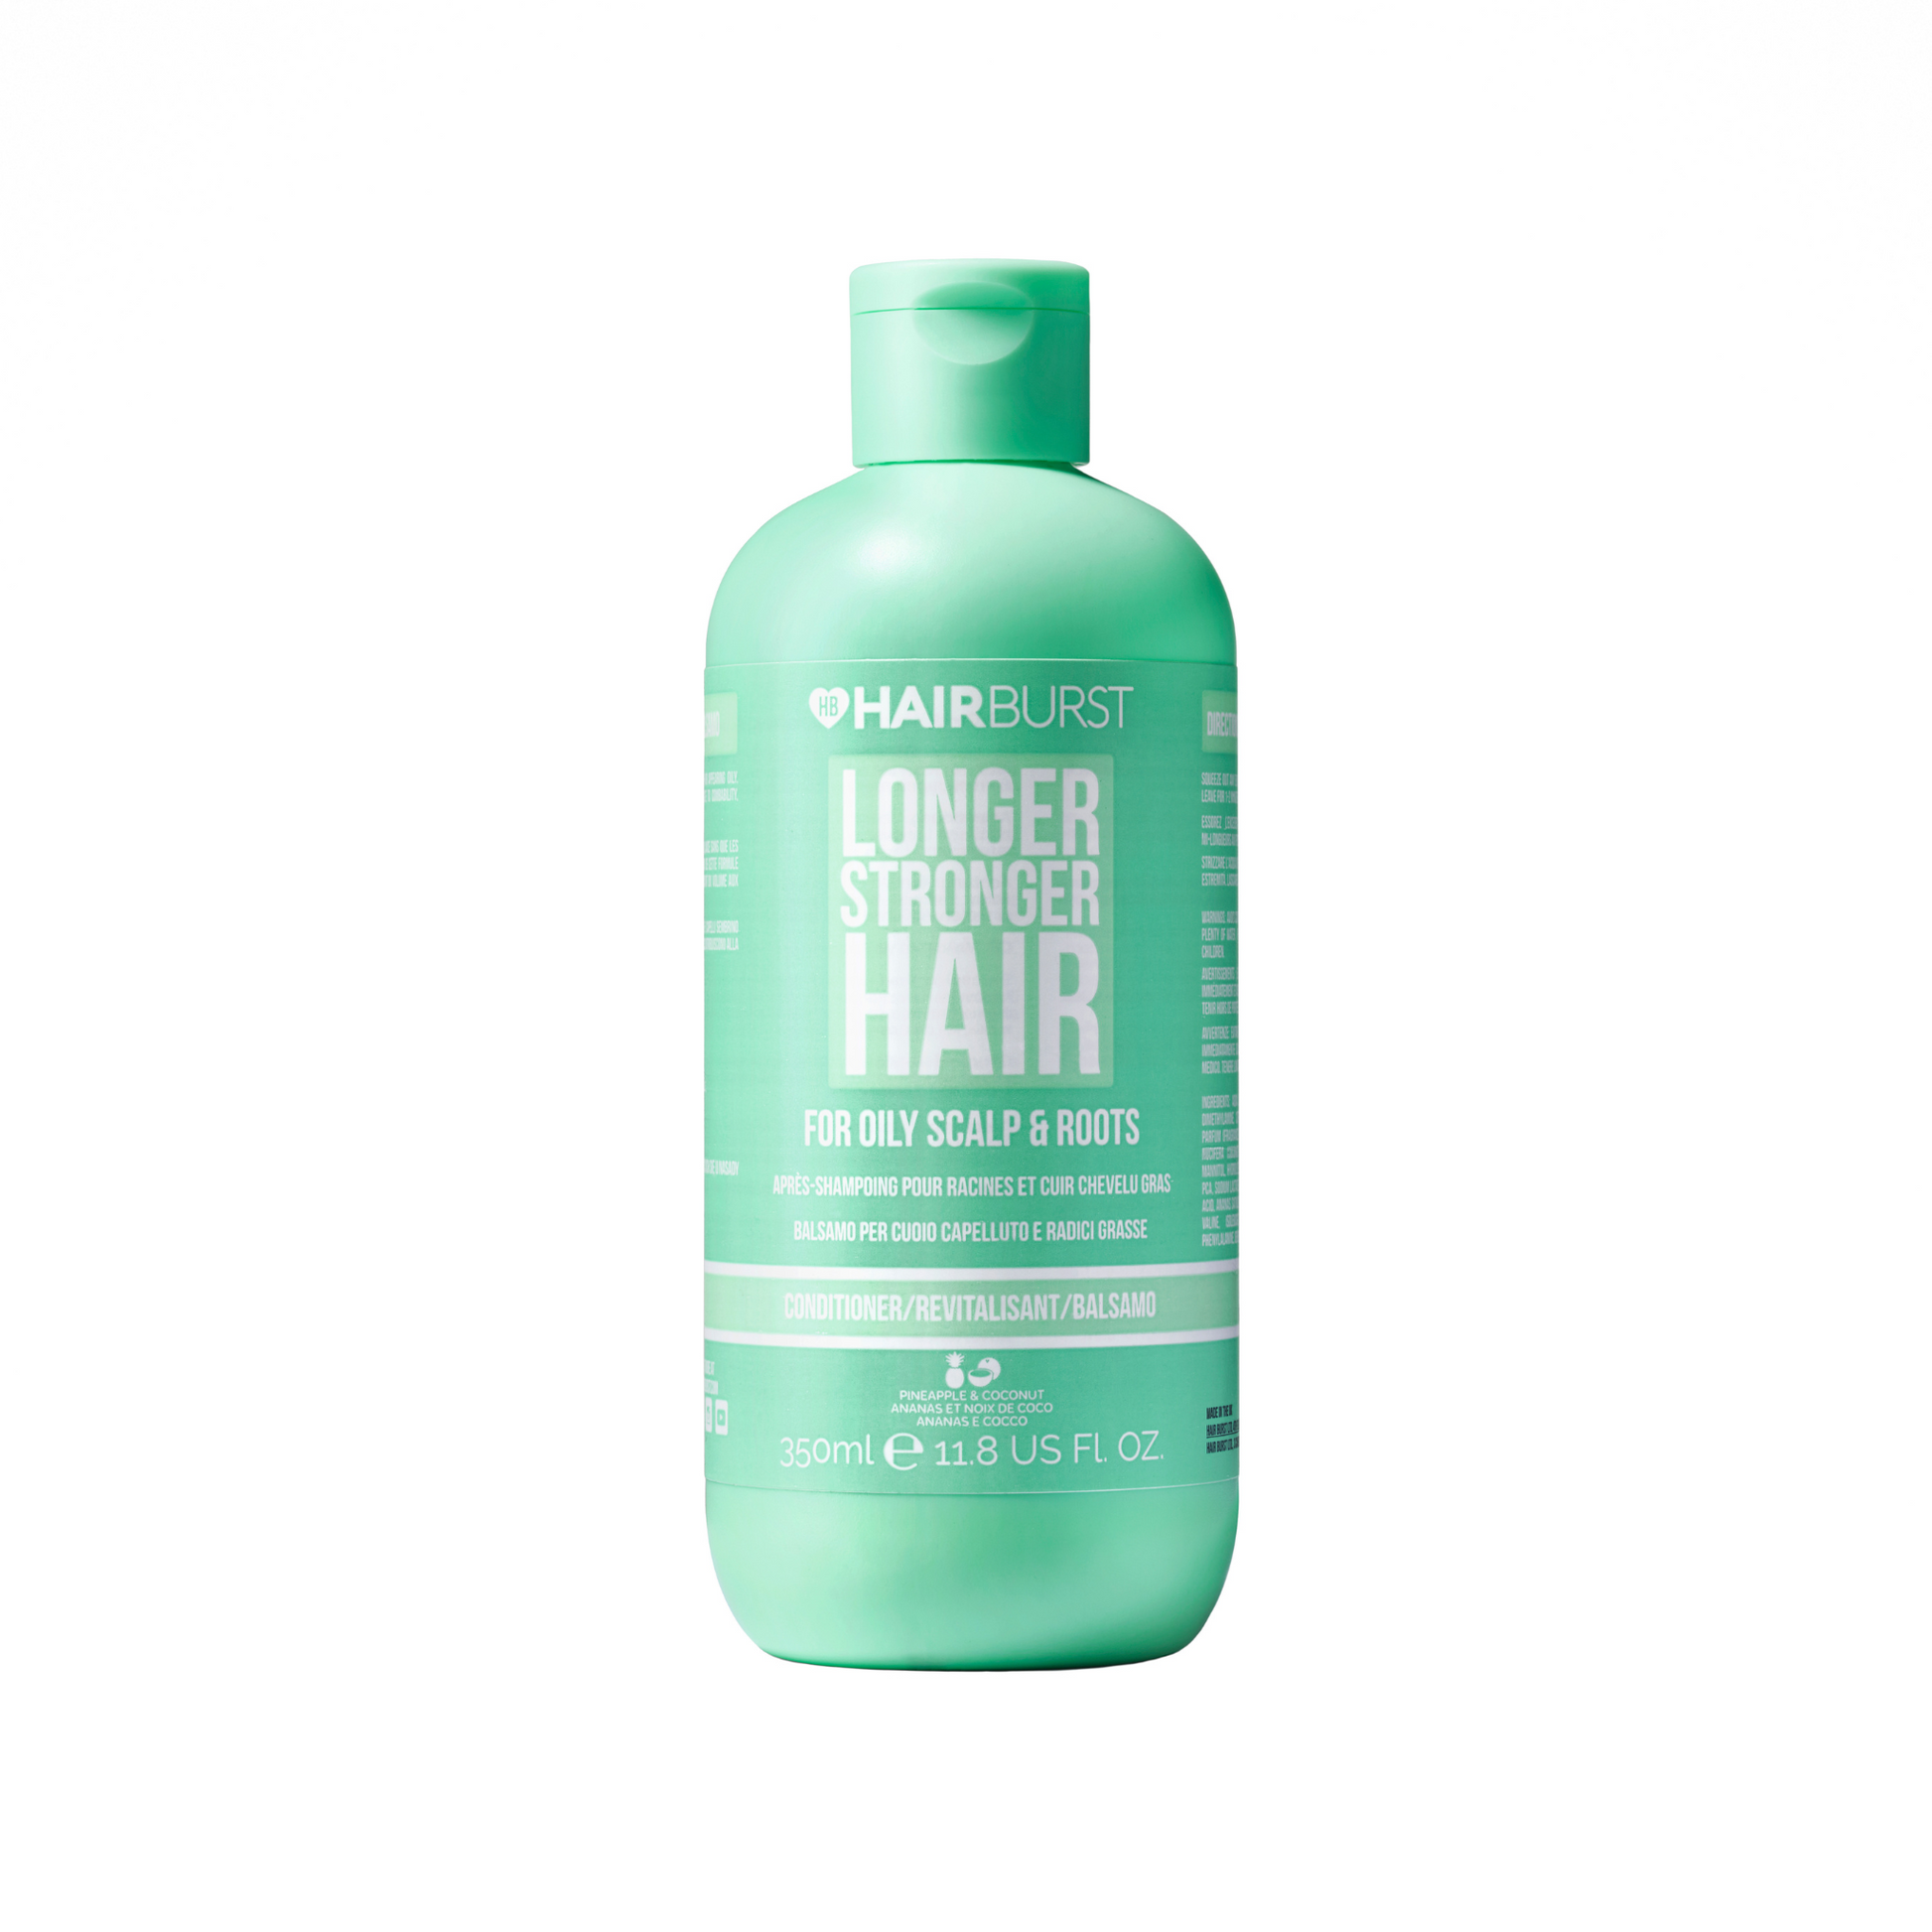 HairBurst conditioner for oily scalp